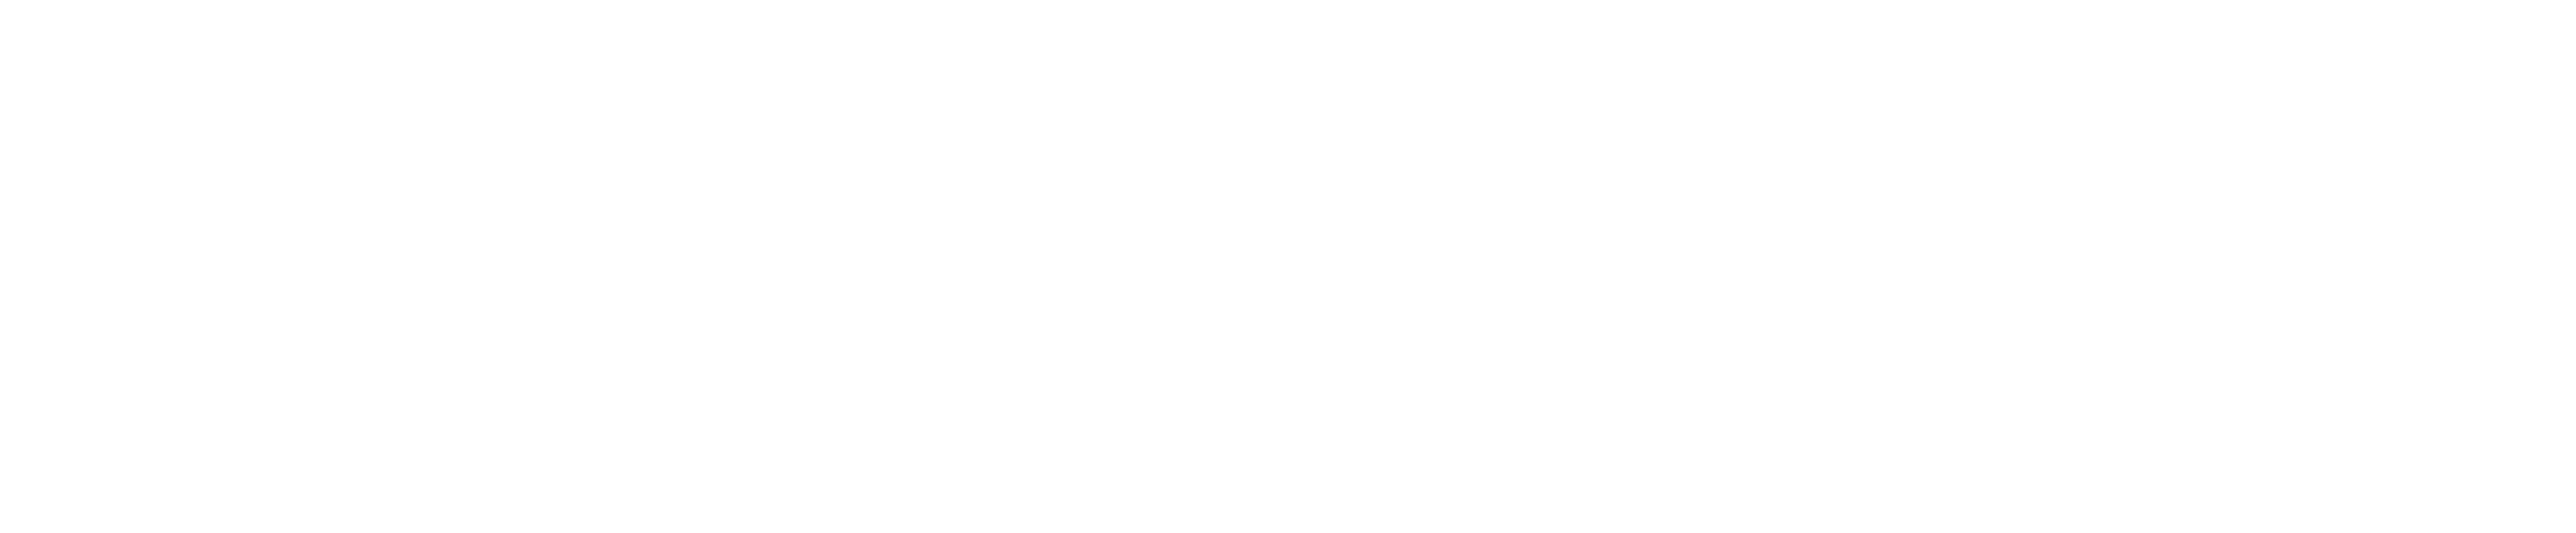 InfiniVAN: Fast Fiber Internet | Internet Service Provider in PH